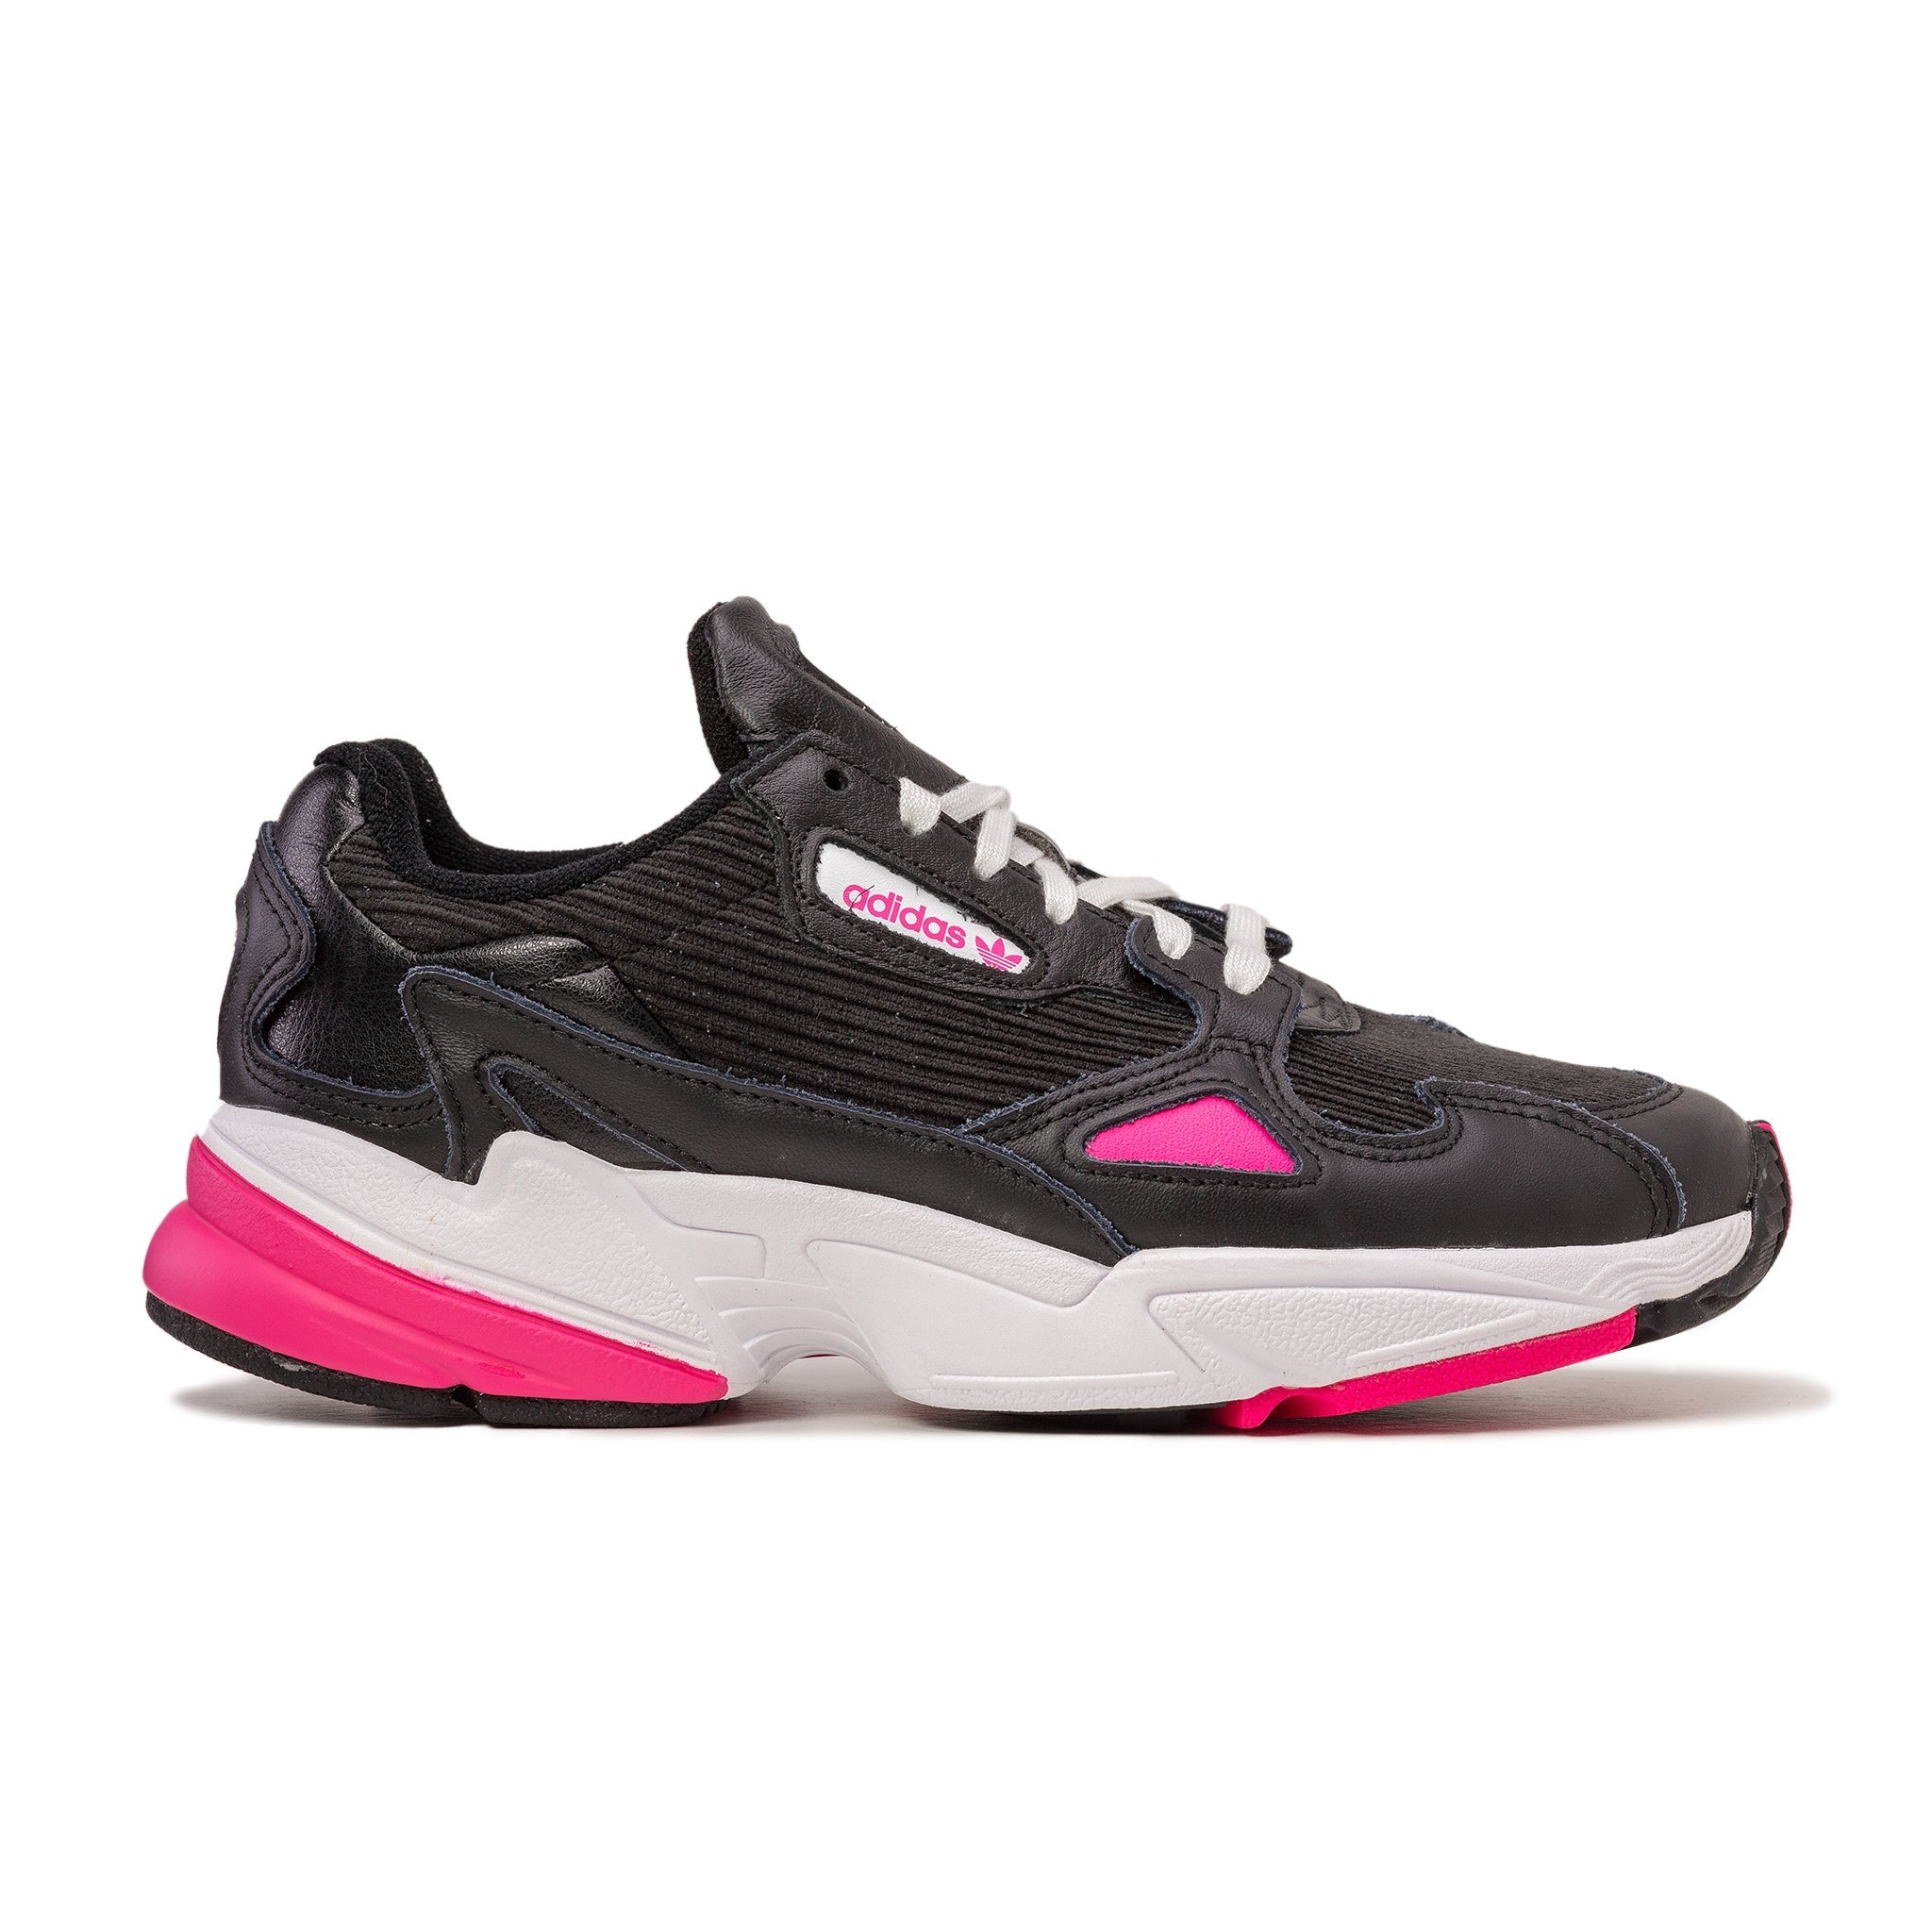 Adidas Women's Falcon Core Black & Pink Sneakers